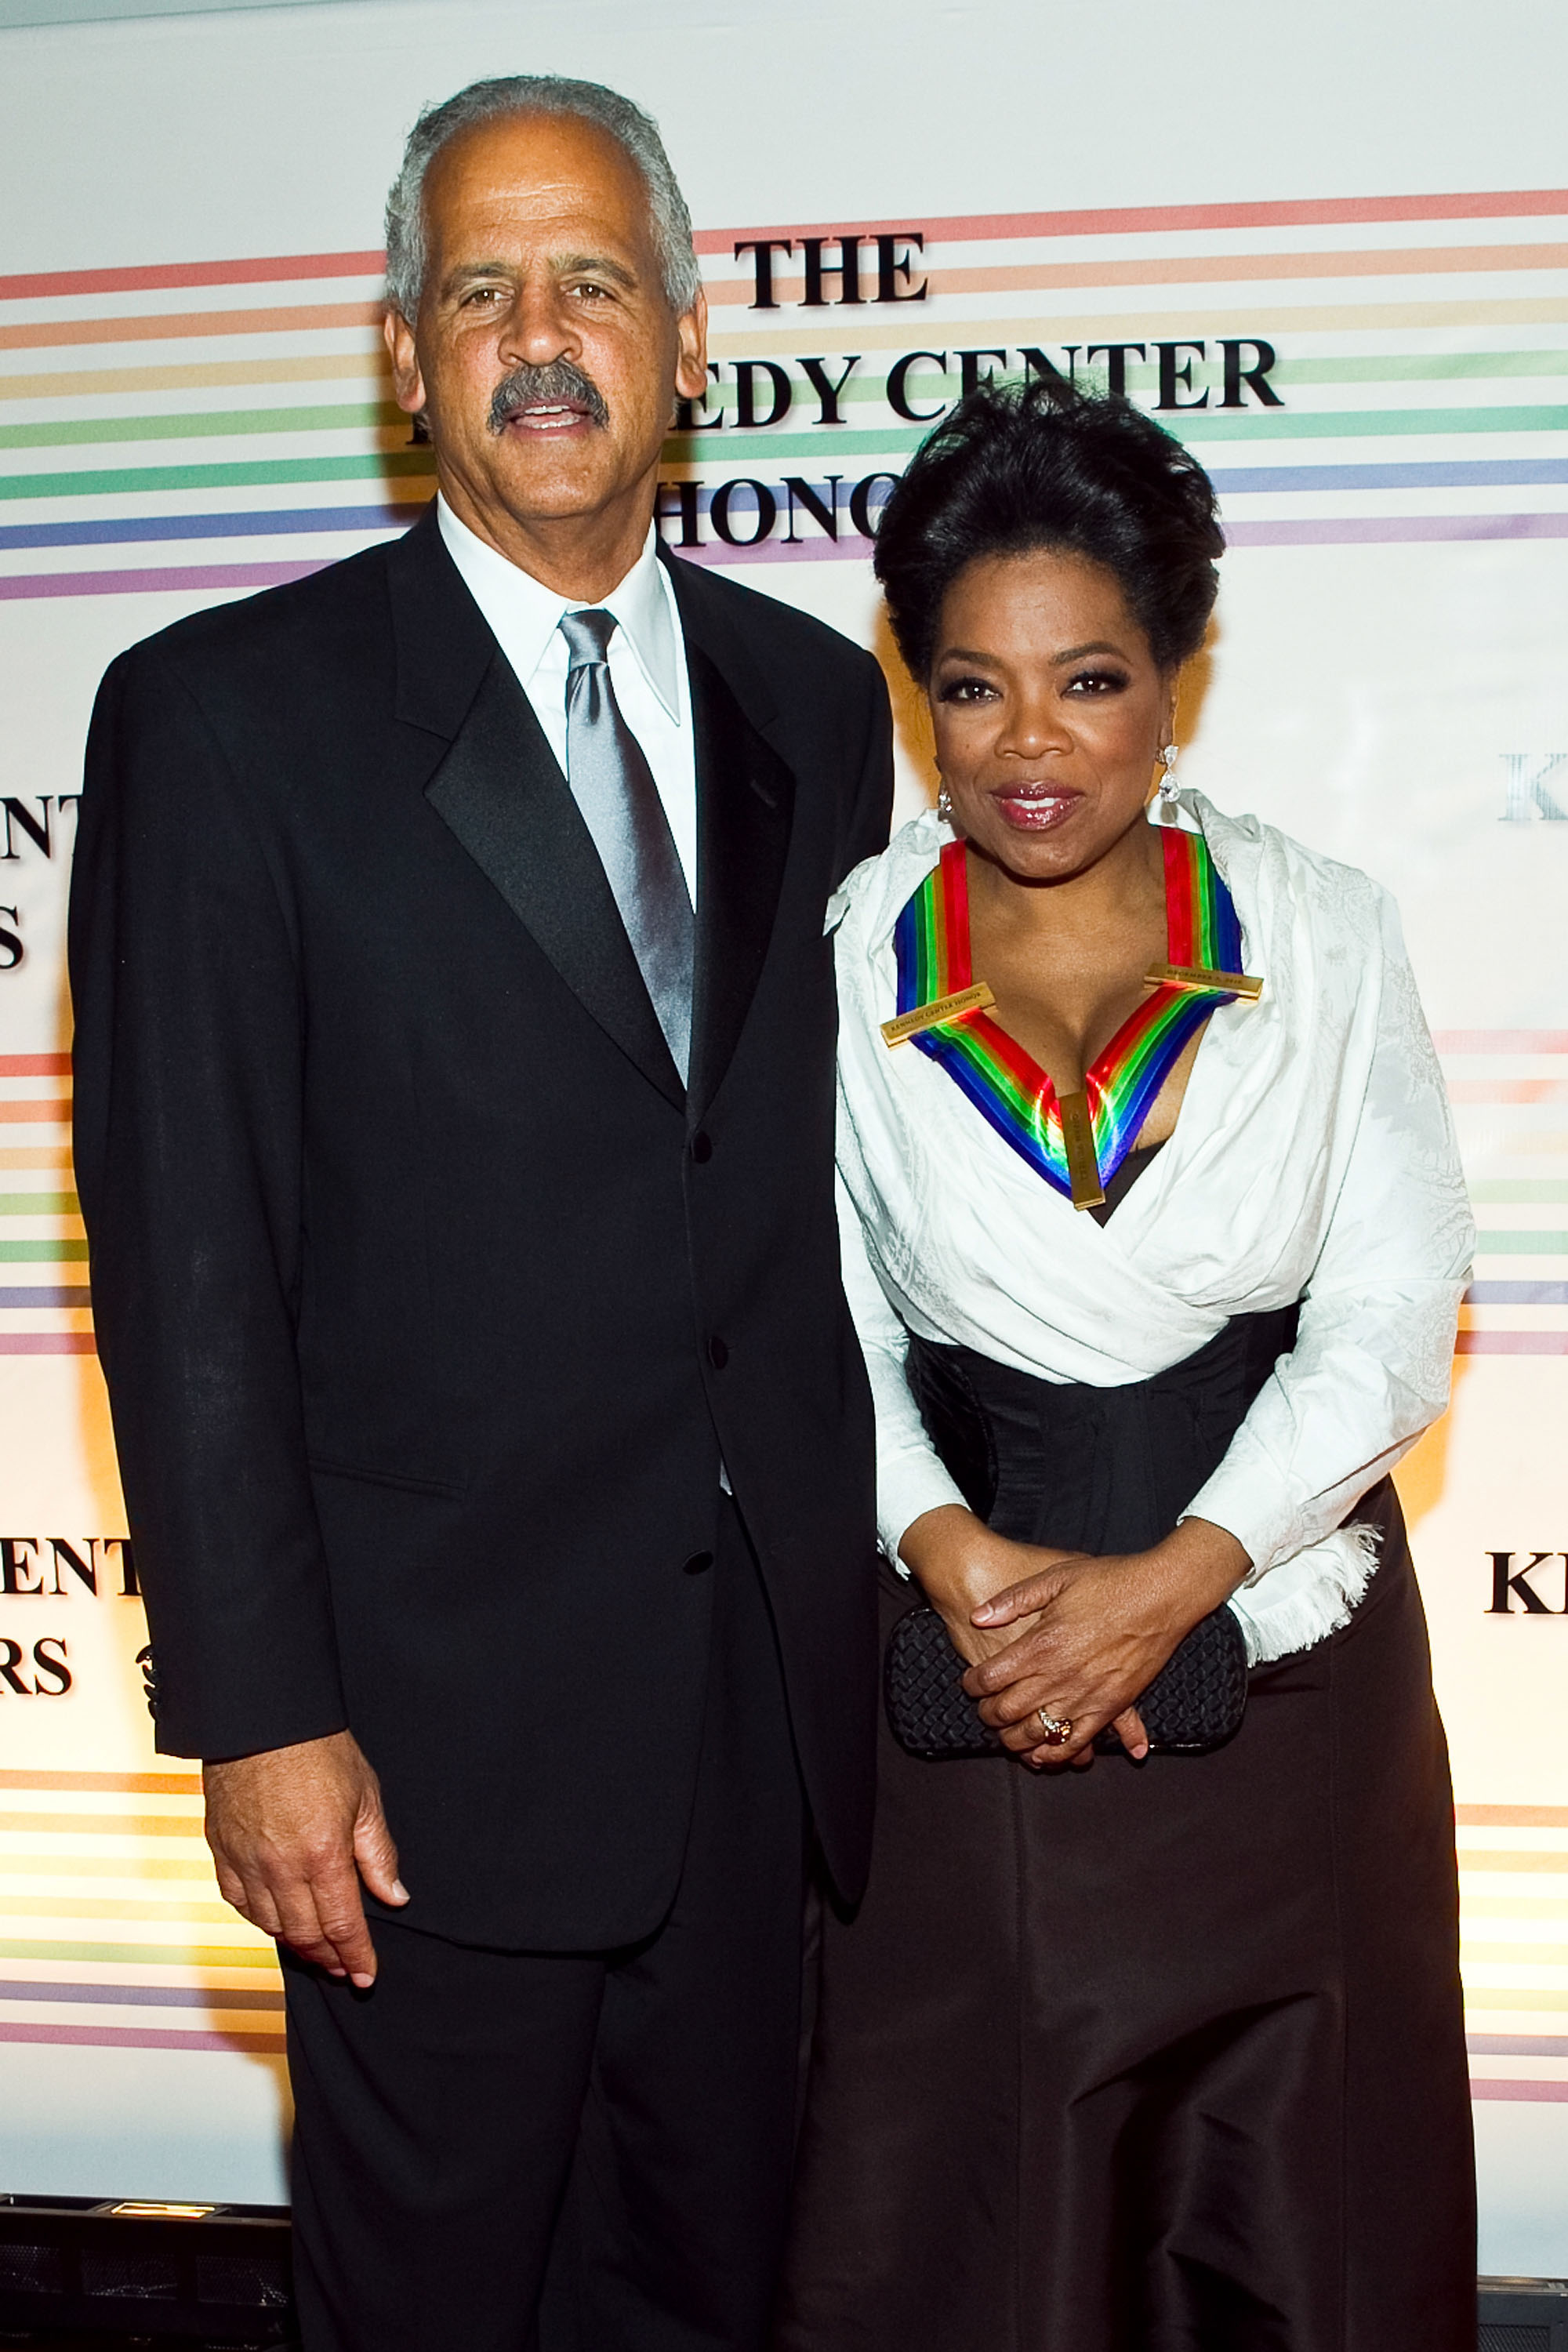 Stedman Graham and Oprah Winfrey in Washington, DC on December 5, 2010 | Source: Getty Images